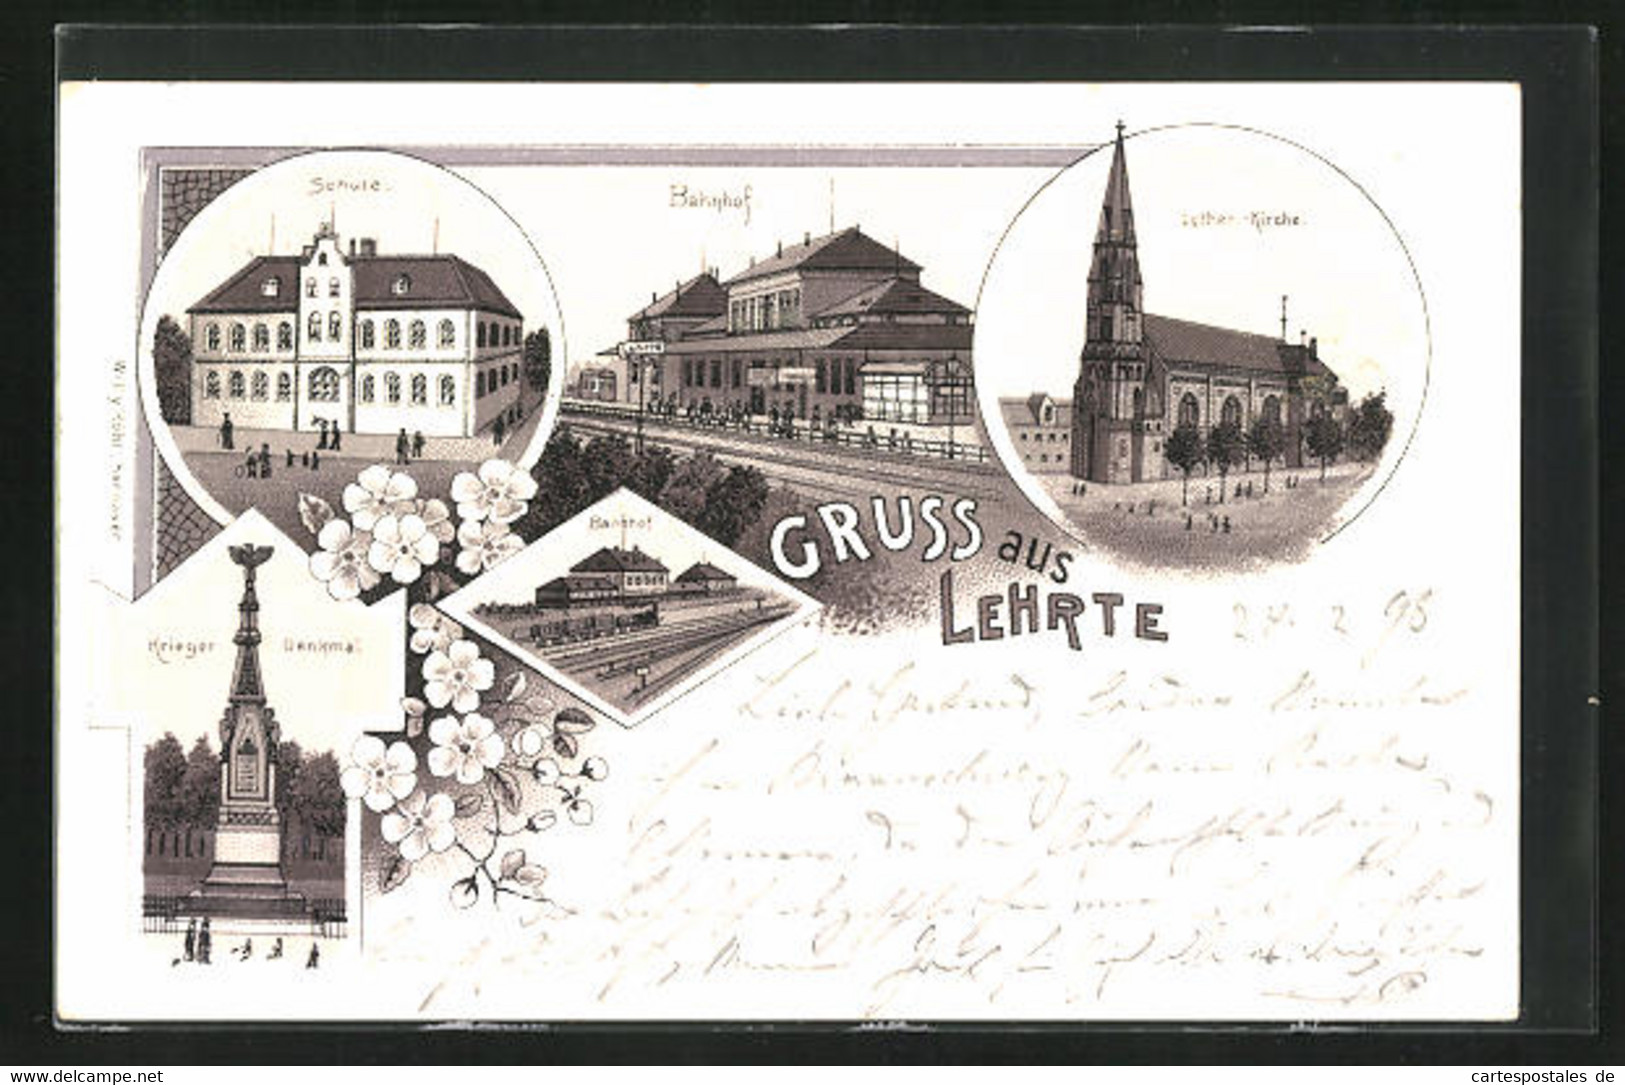 Lithographie Lehrte, Bahnhof, Schule, Luther-Kirche - Lehrte